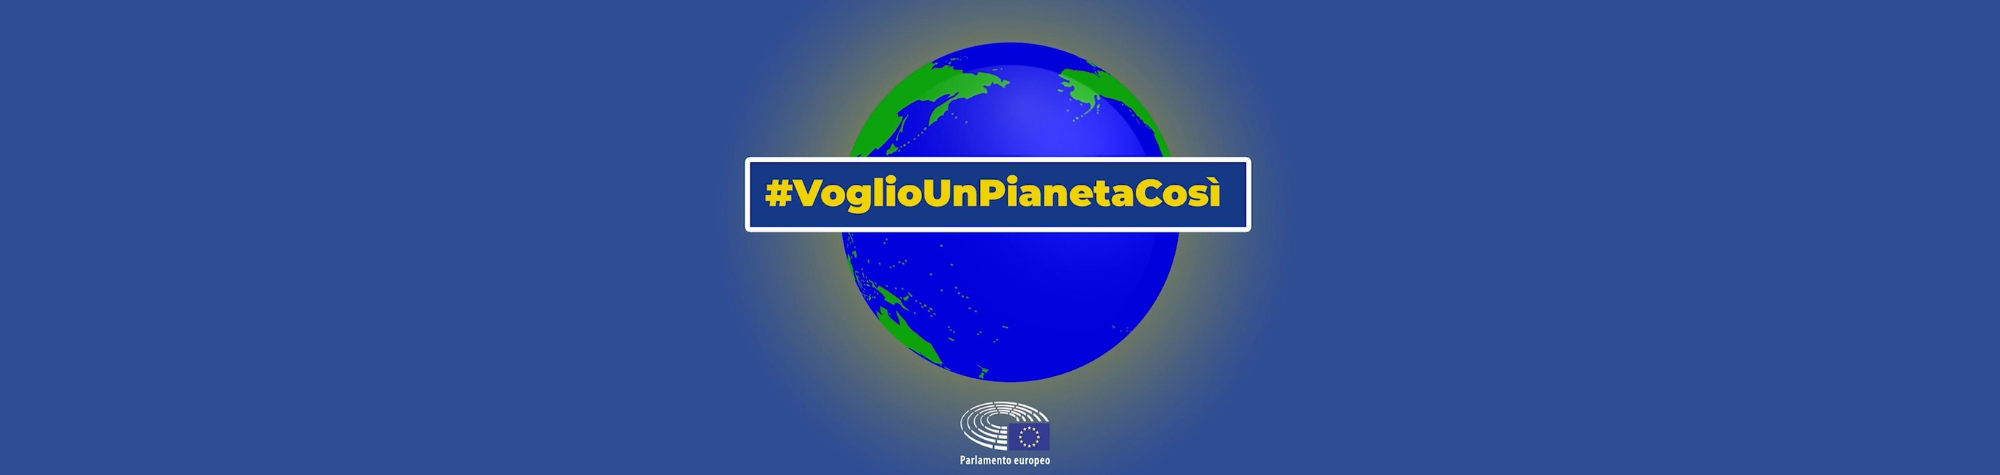 #VoglioUnPianetaCosì by ReLearn and European Parliament